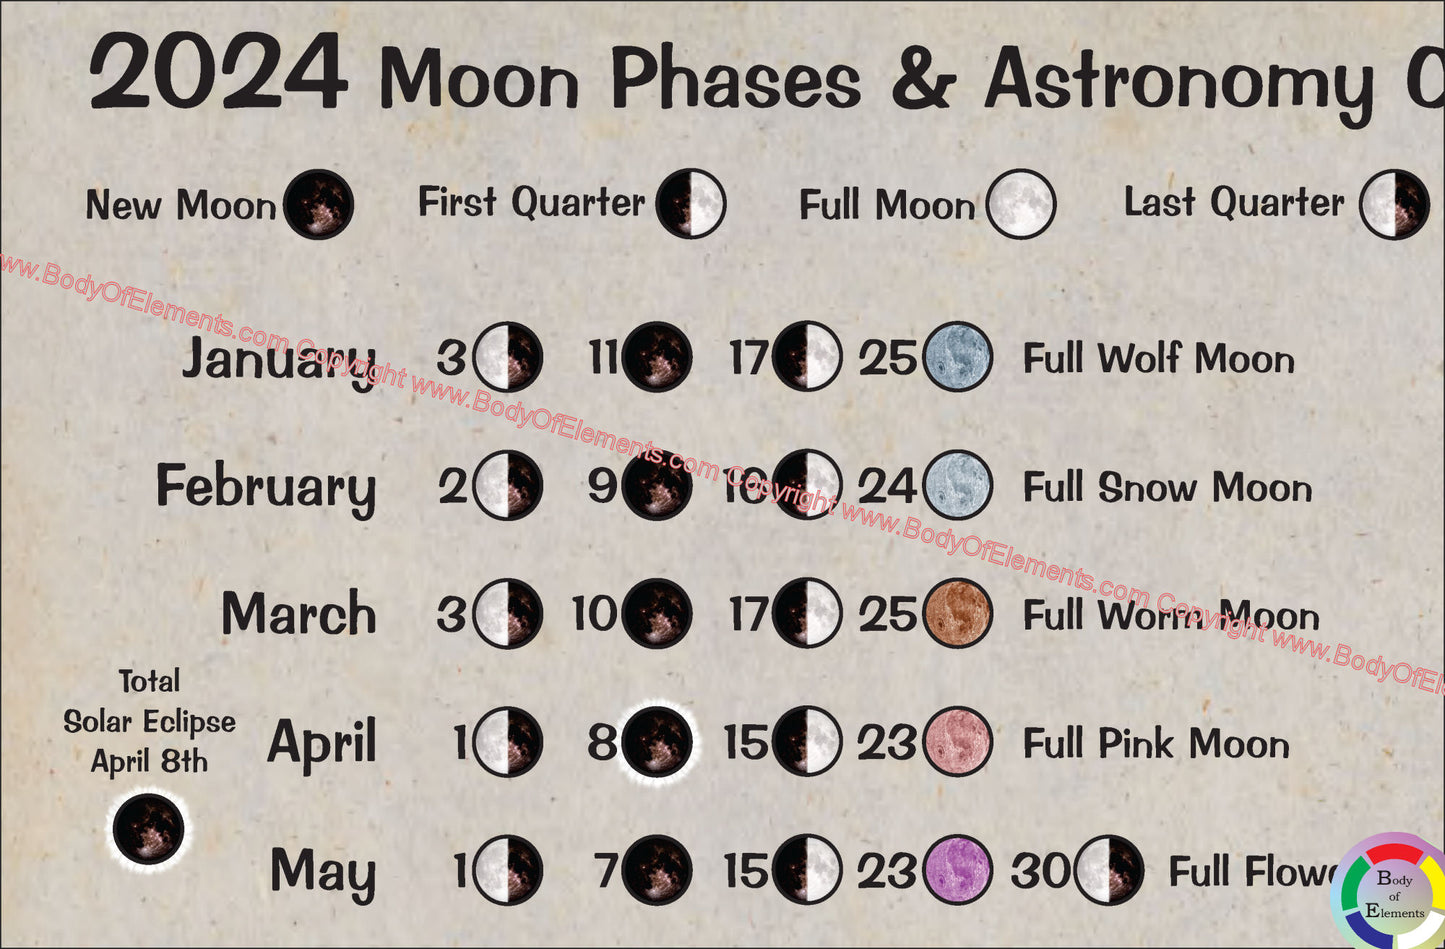 Moon Phases and Lunar Astronomy Calendar